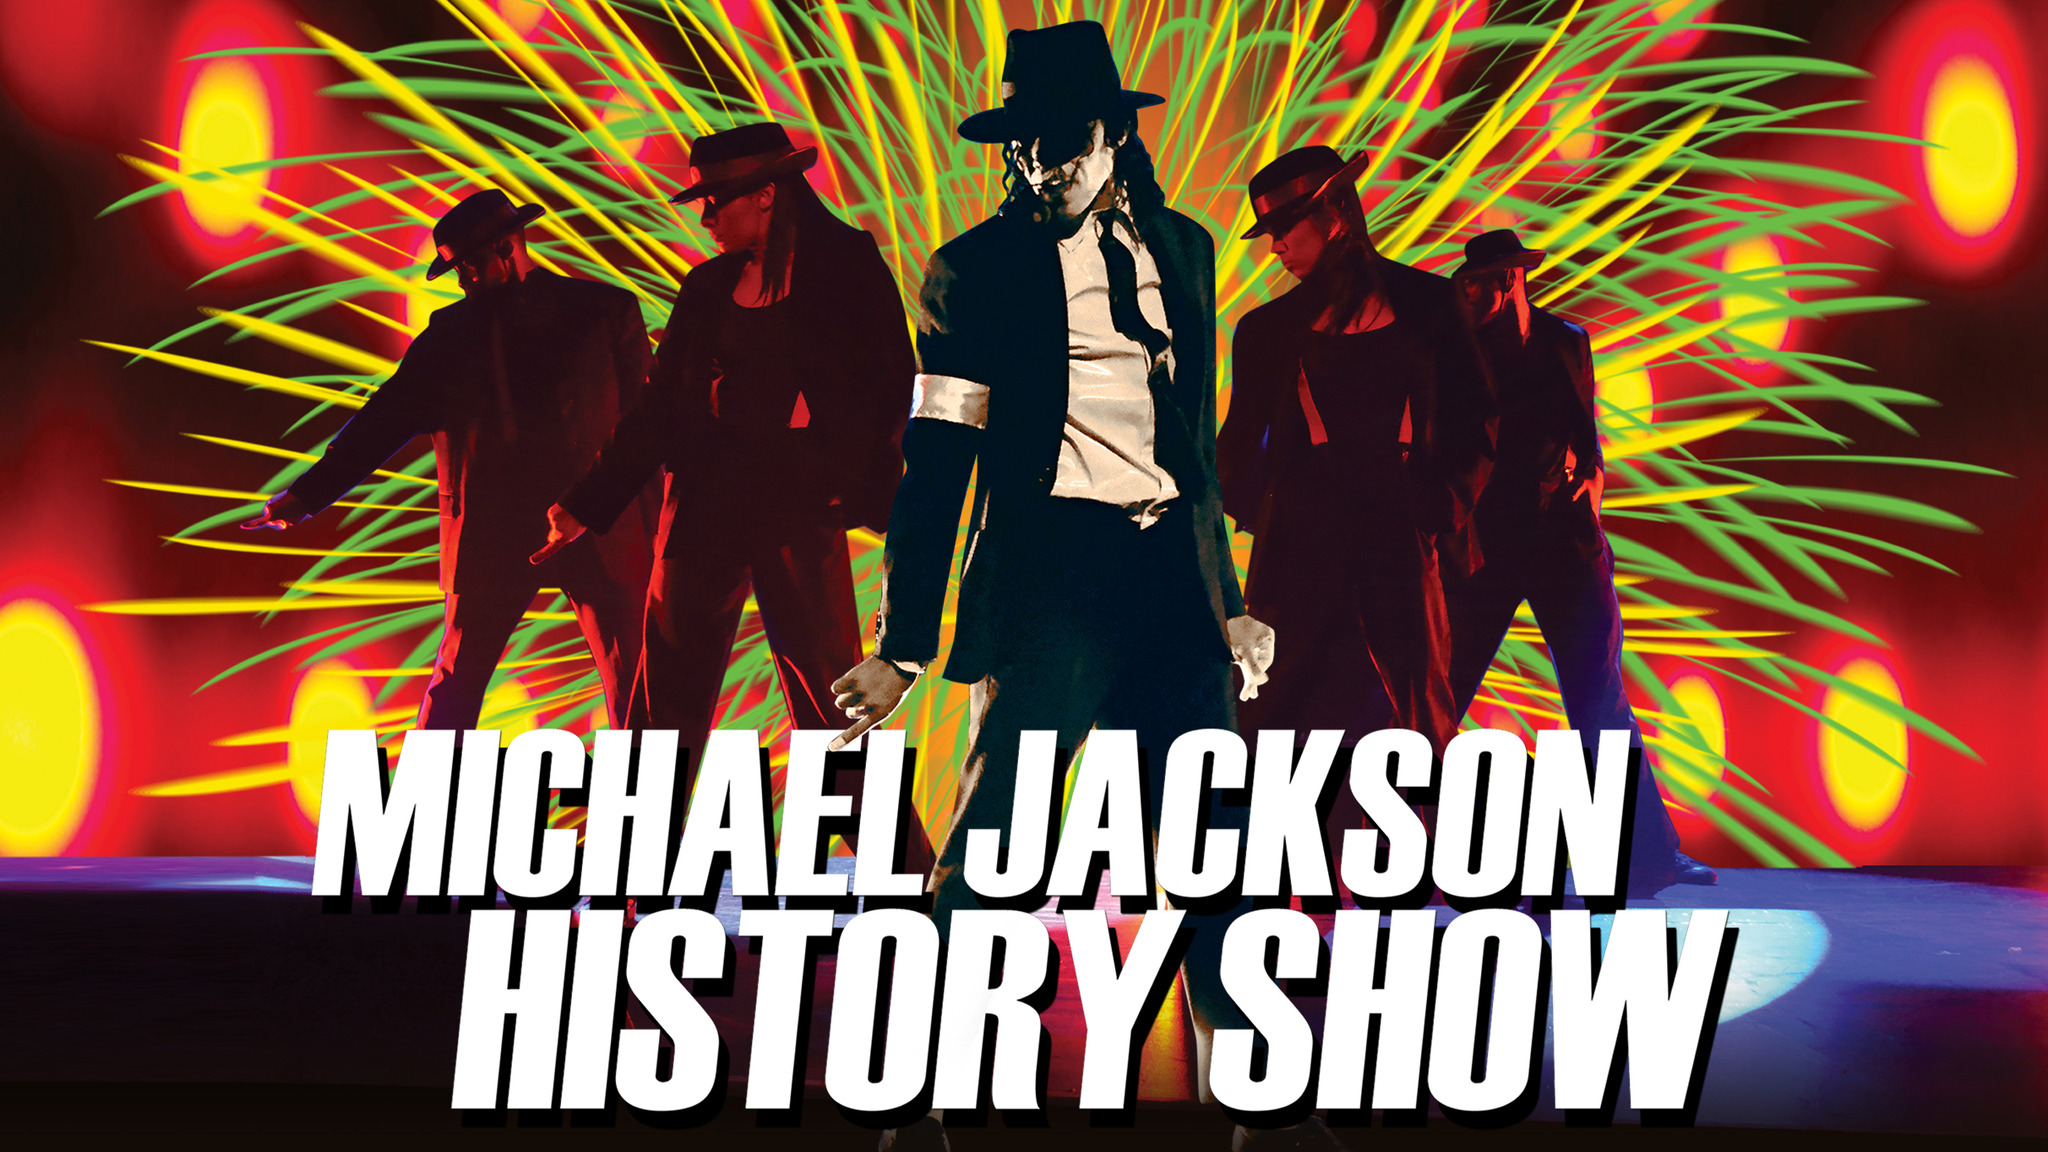 Michael Jackson the History Show Tickets, 2023 Concert Tour Dates ...